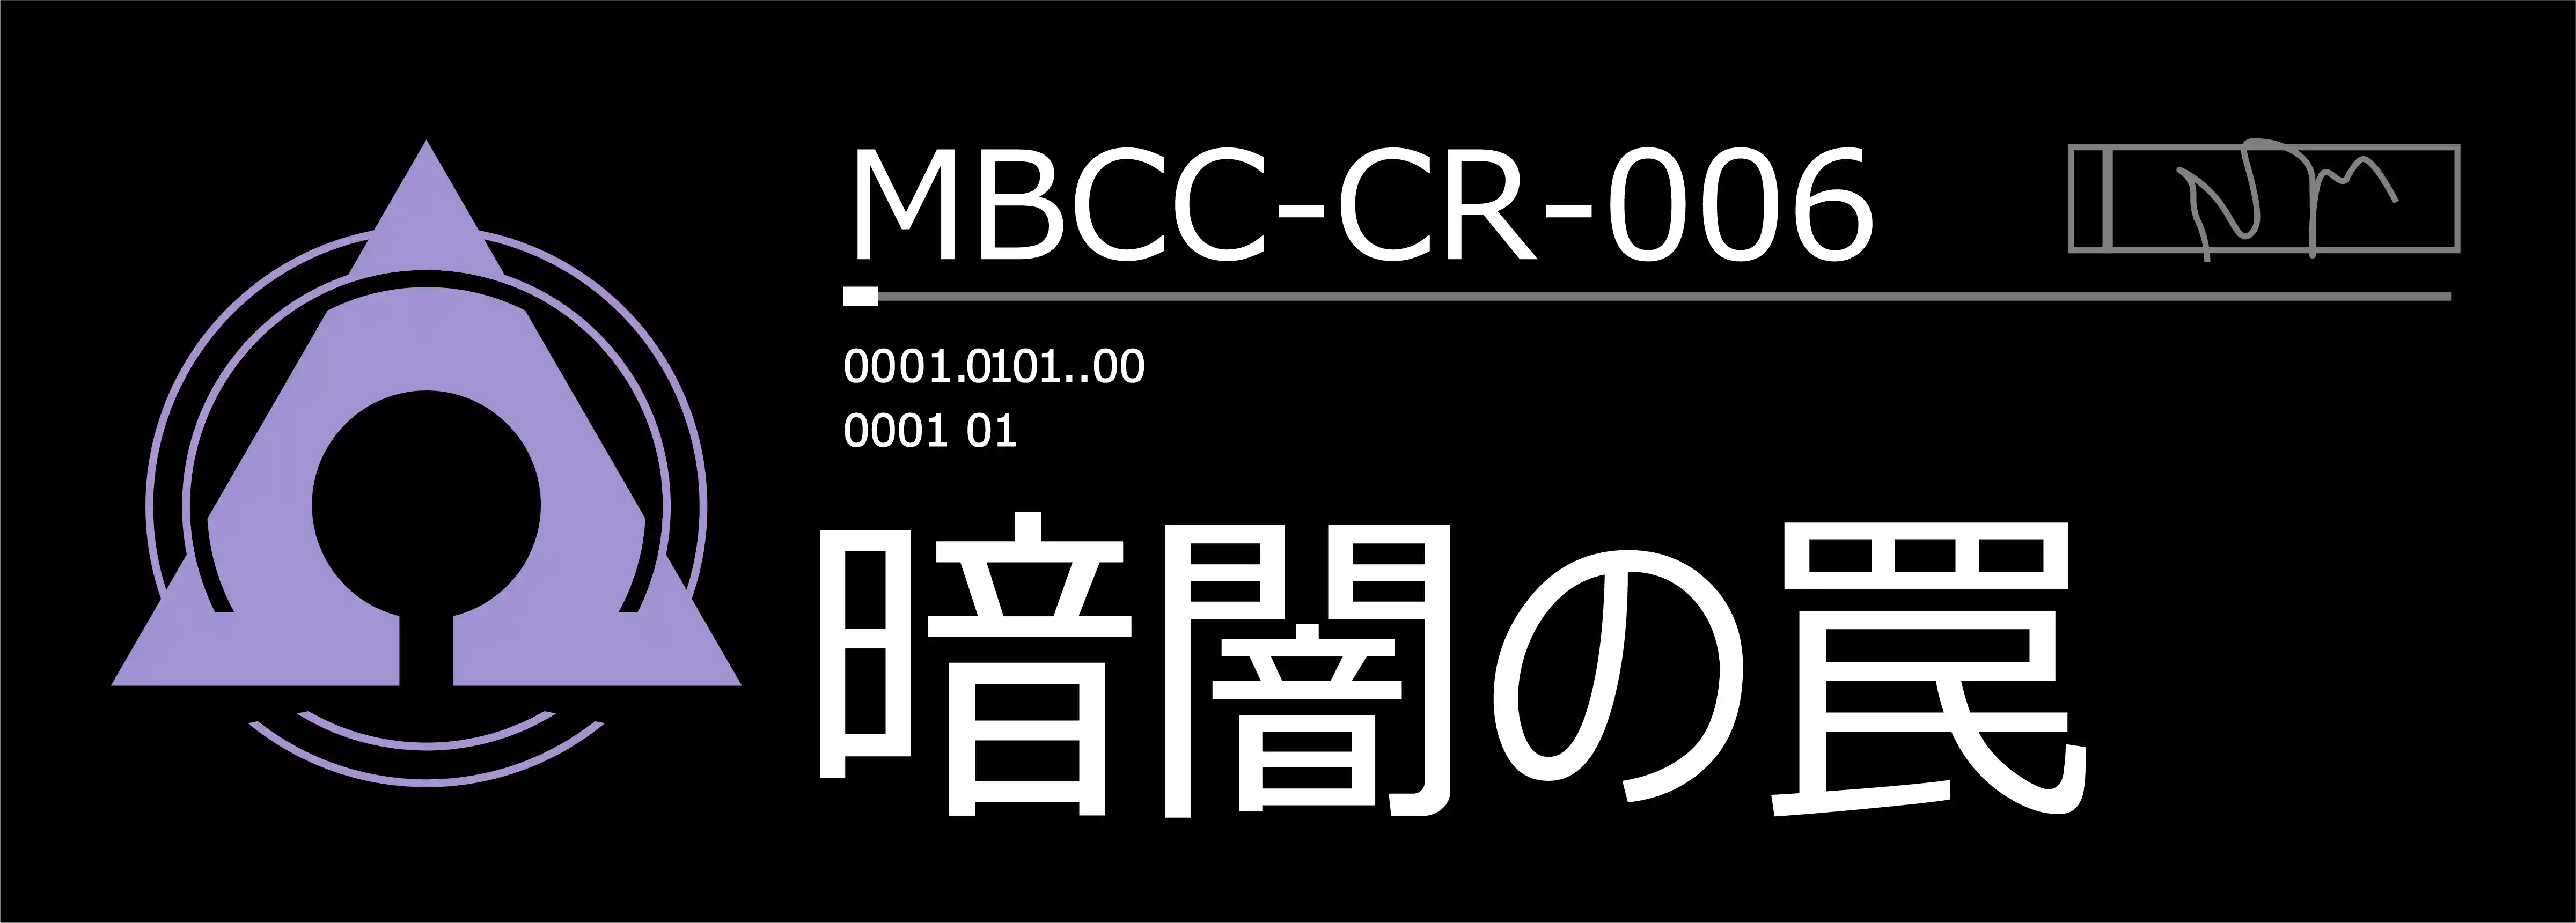 MBCC-CR-006.png